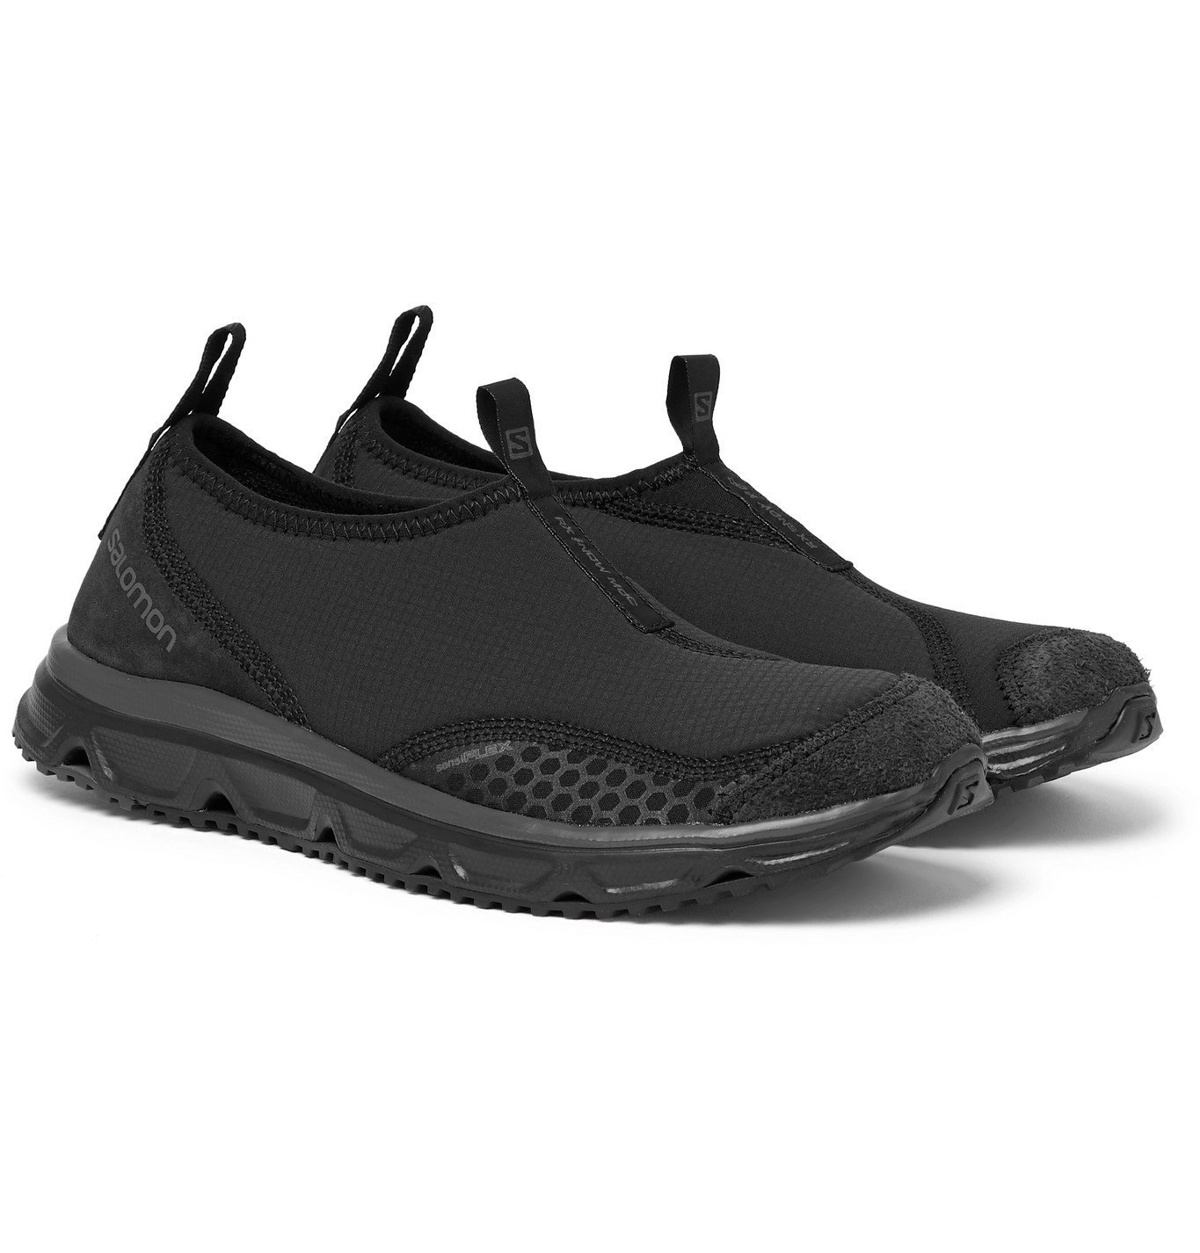 Bezighouden via boter Salomon - RX Snow Moc Advanced Ripstop, Suede and Rubber Sneakers - Black  Salomon